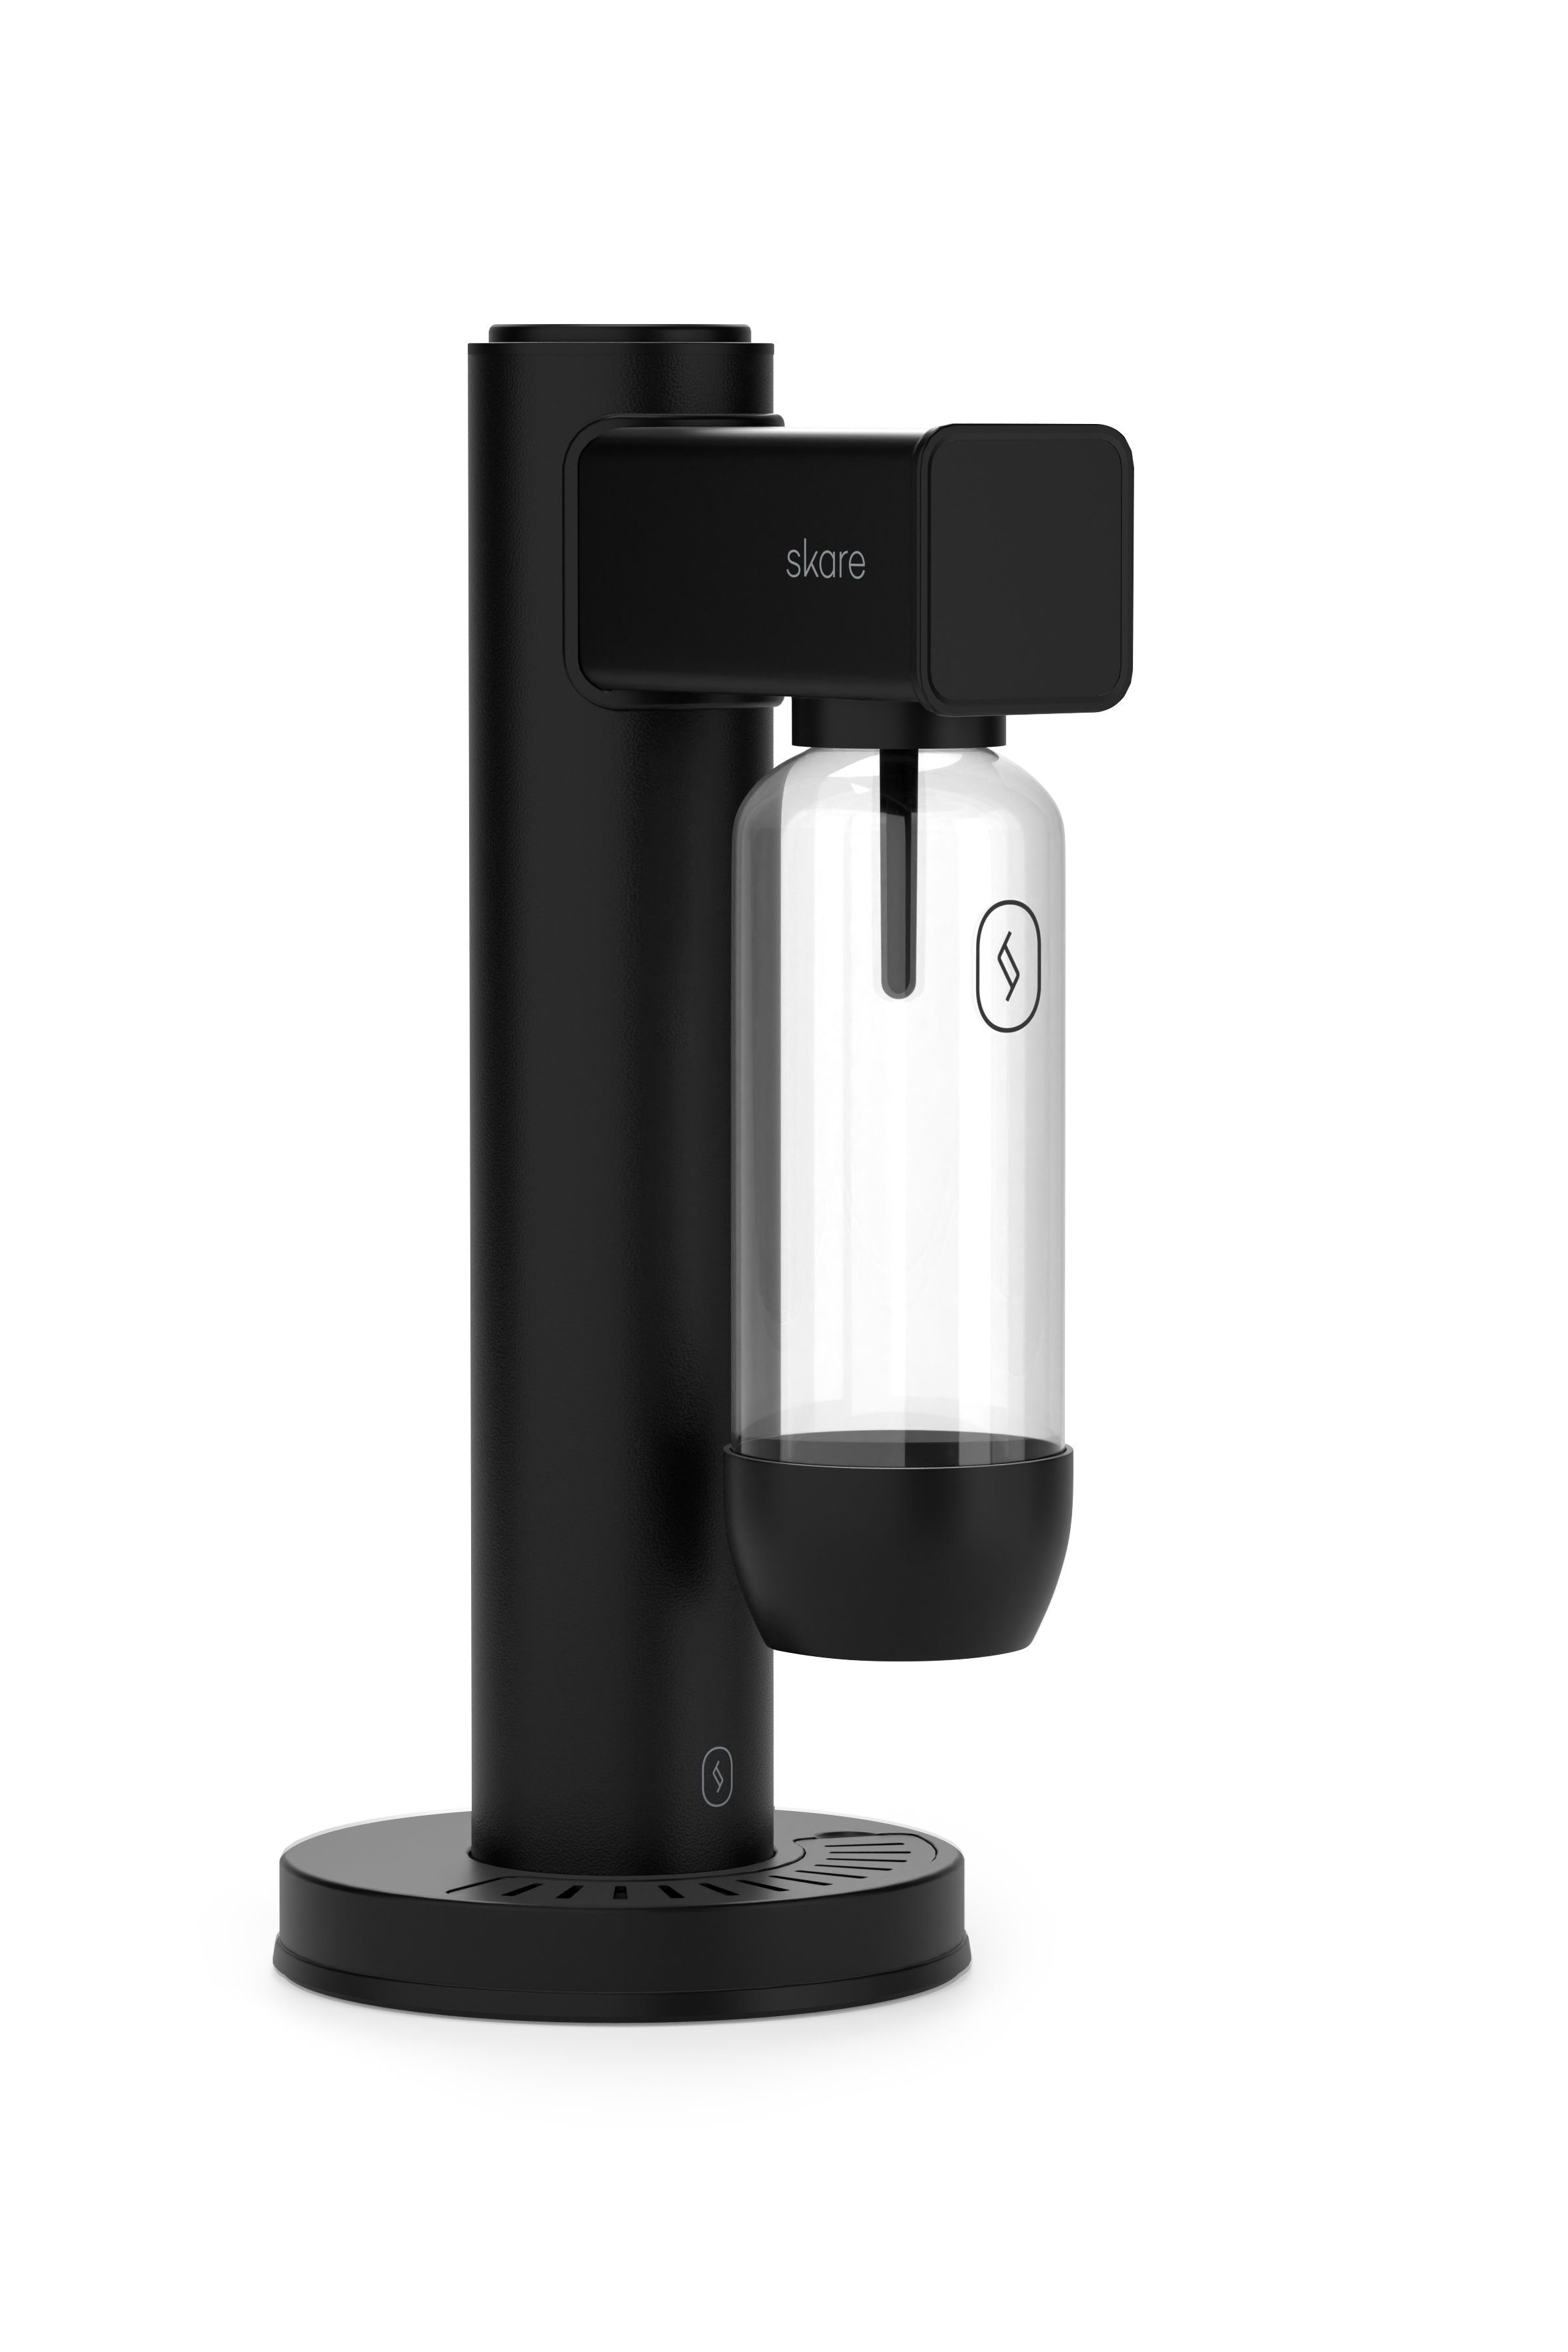 Skare Wassersprudler SKARE Soda Maker 2 – nachhaltiger Wassersprudler, aus Edelstahl, benötigt keinen Strom